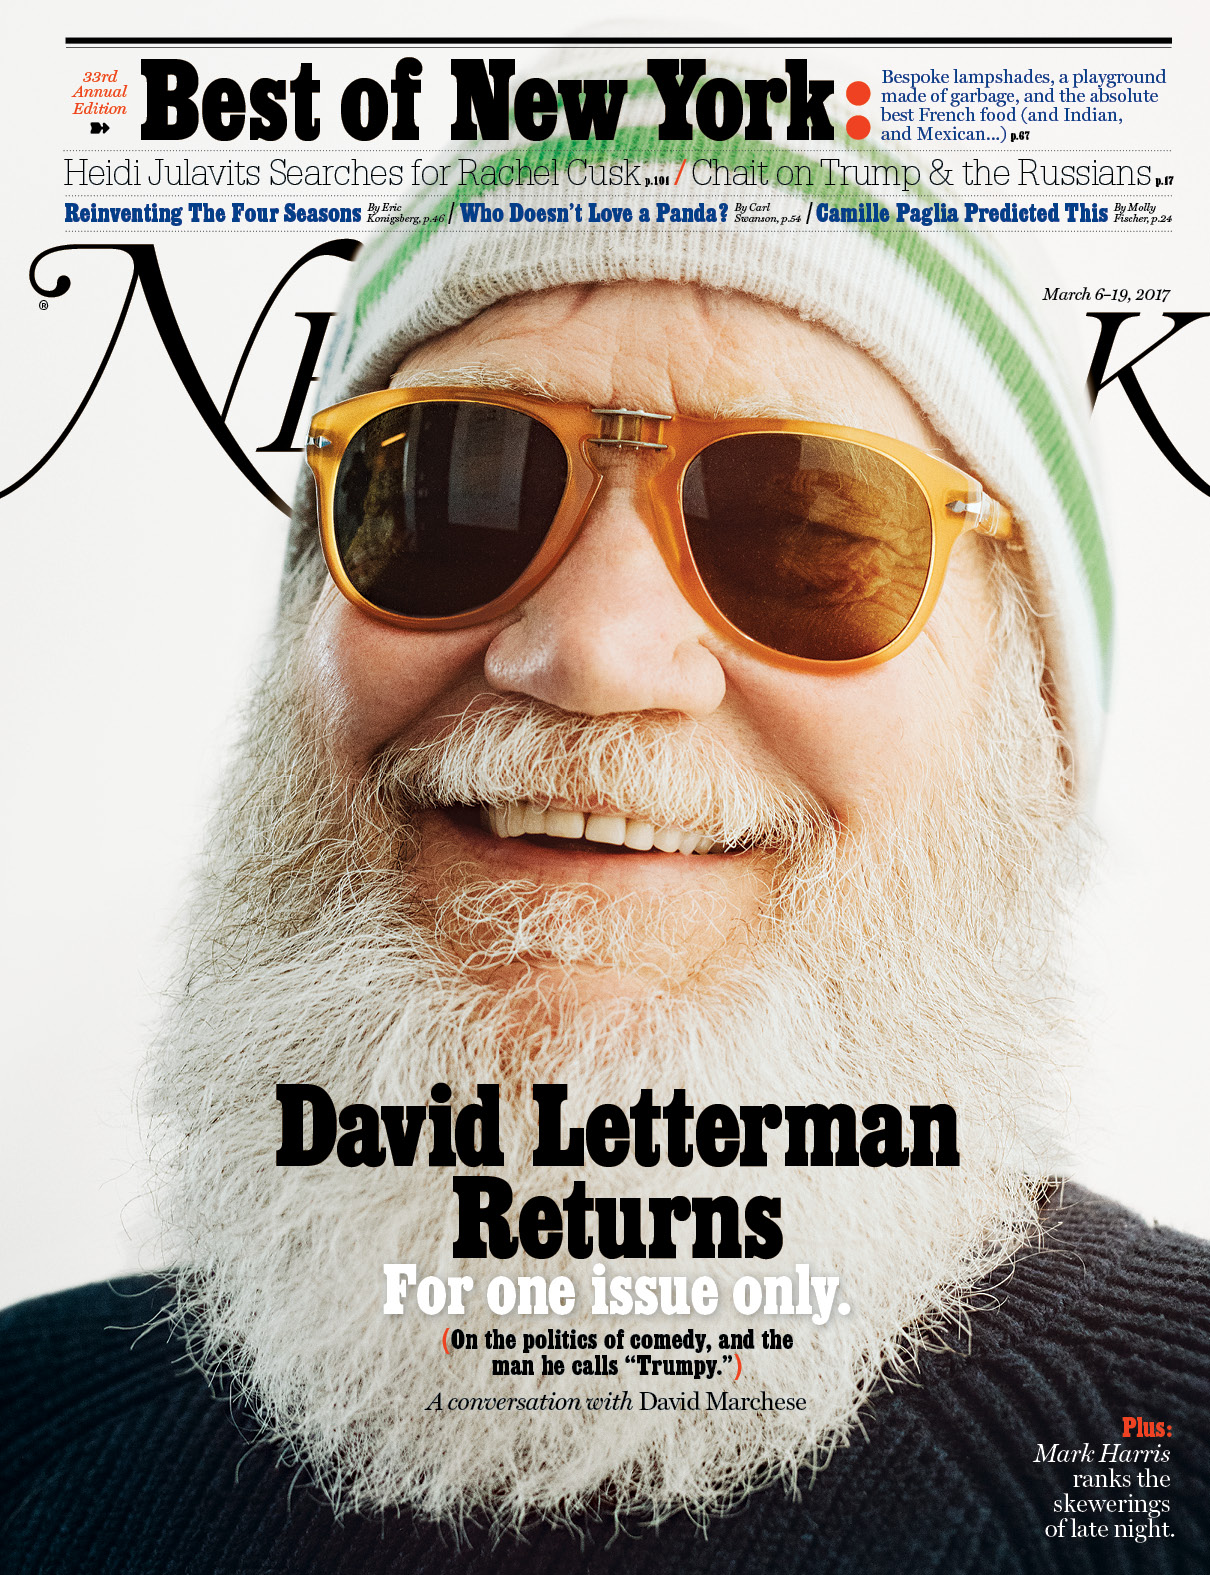 New York - “David Letterman Returns,” March 6-19, 2017